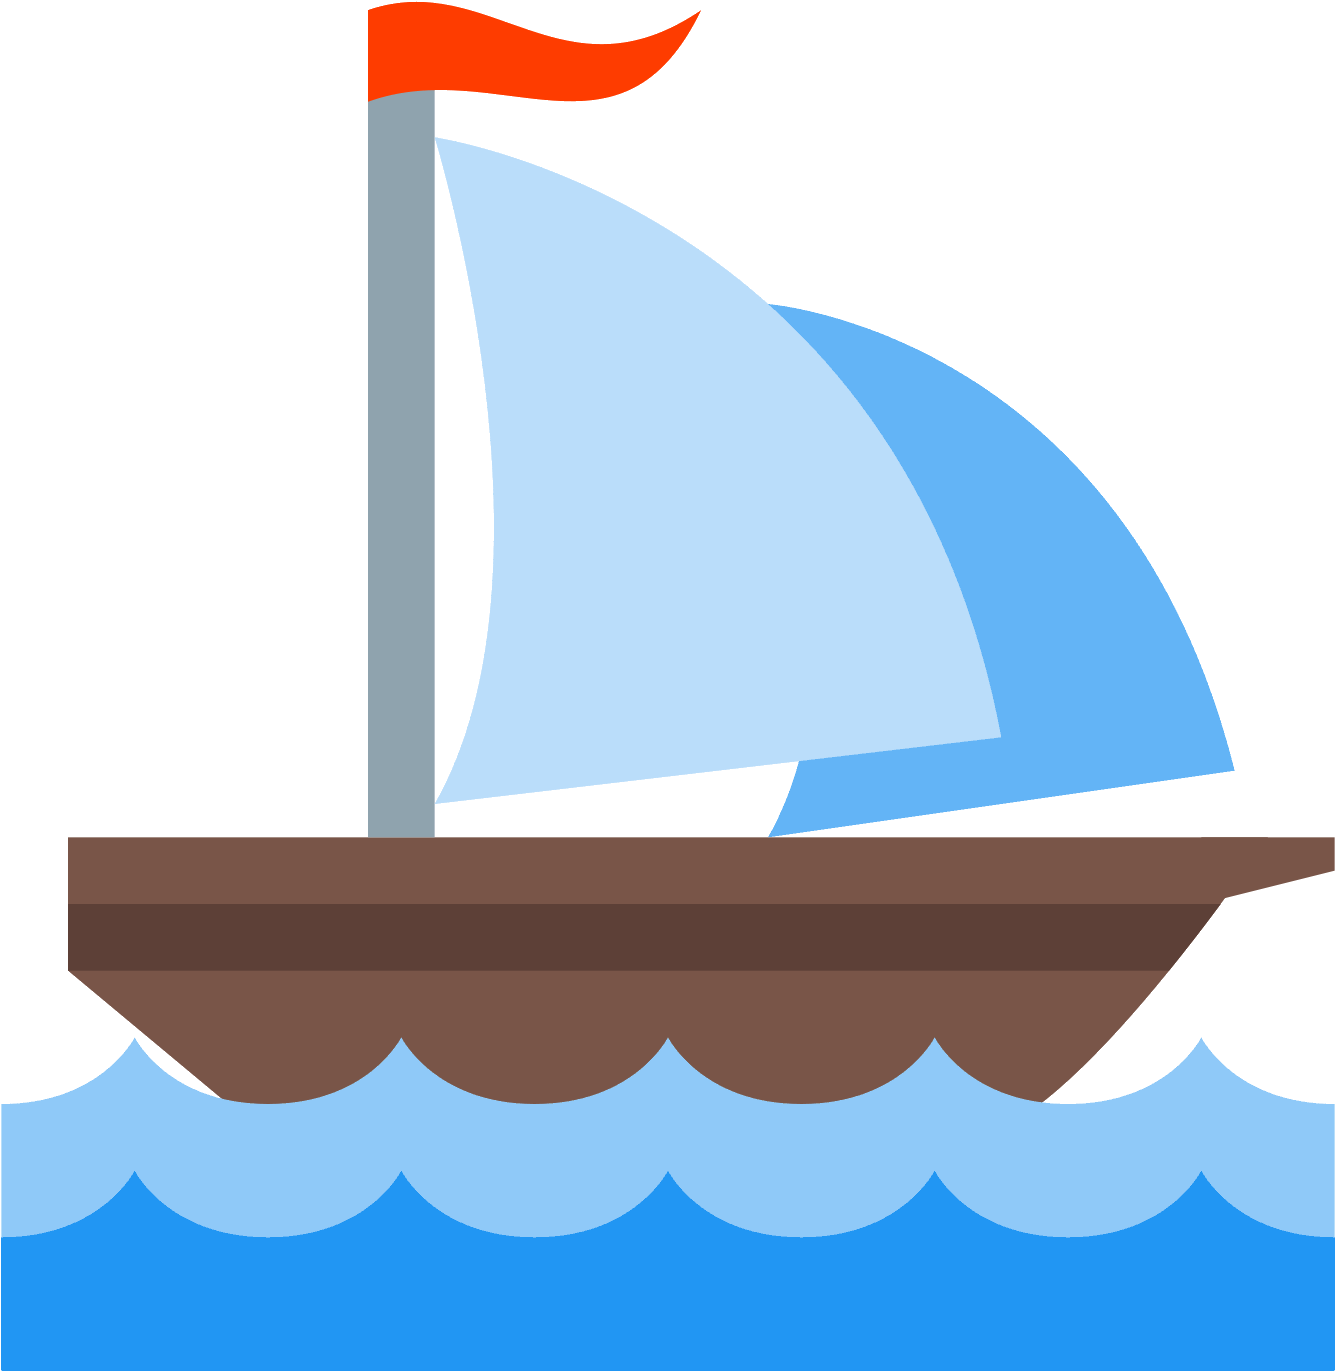 Sailboat Vector Illustration PNG